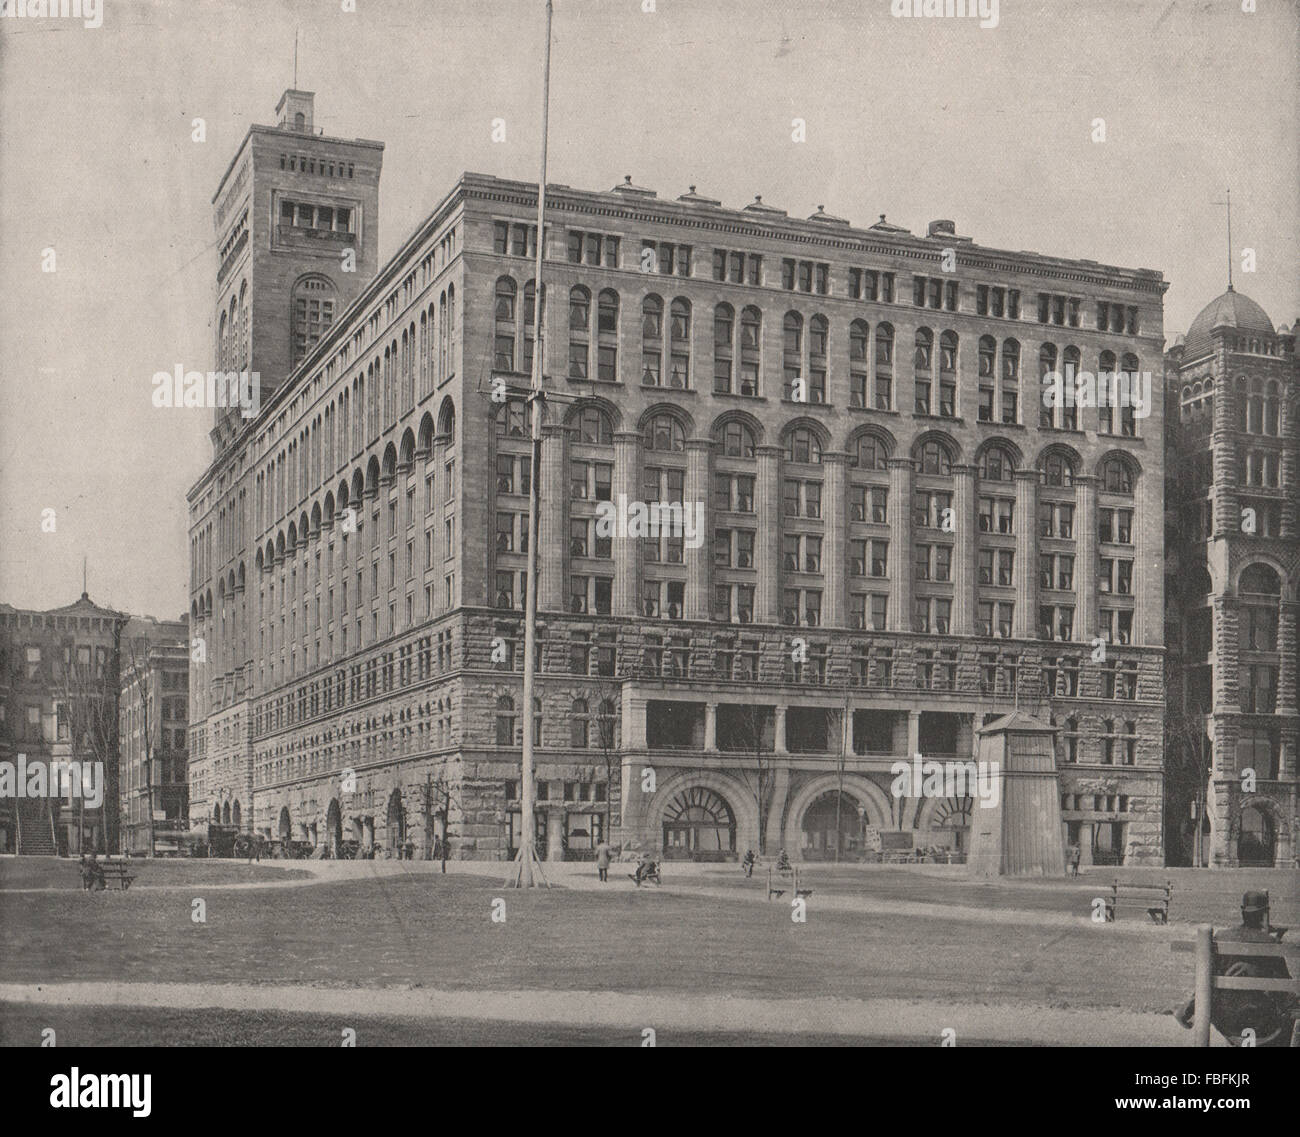 Chicago 1900 Photo The Auditorium and annex IL now Roosevelt University 